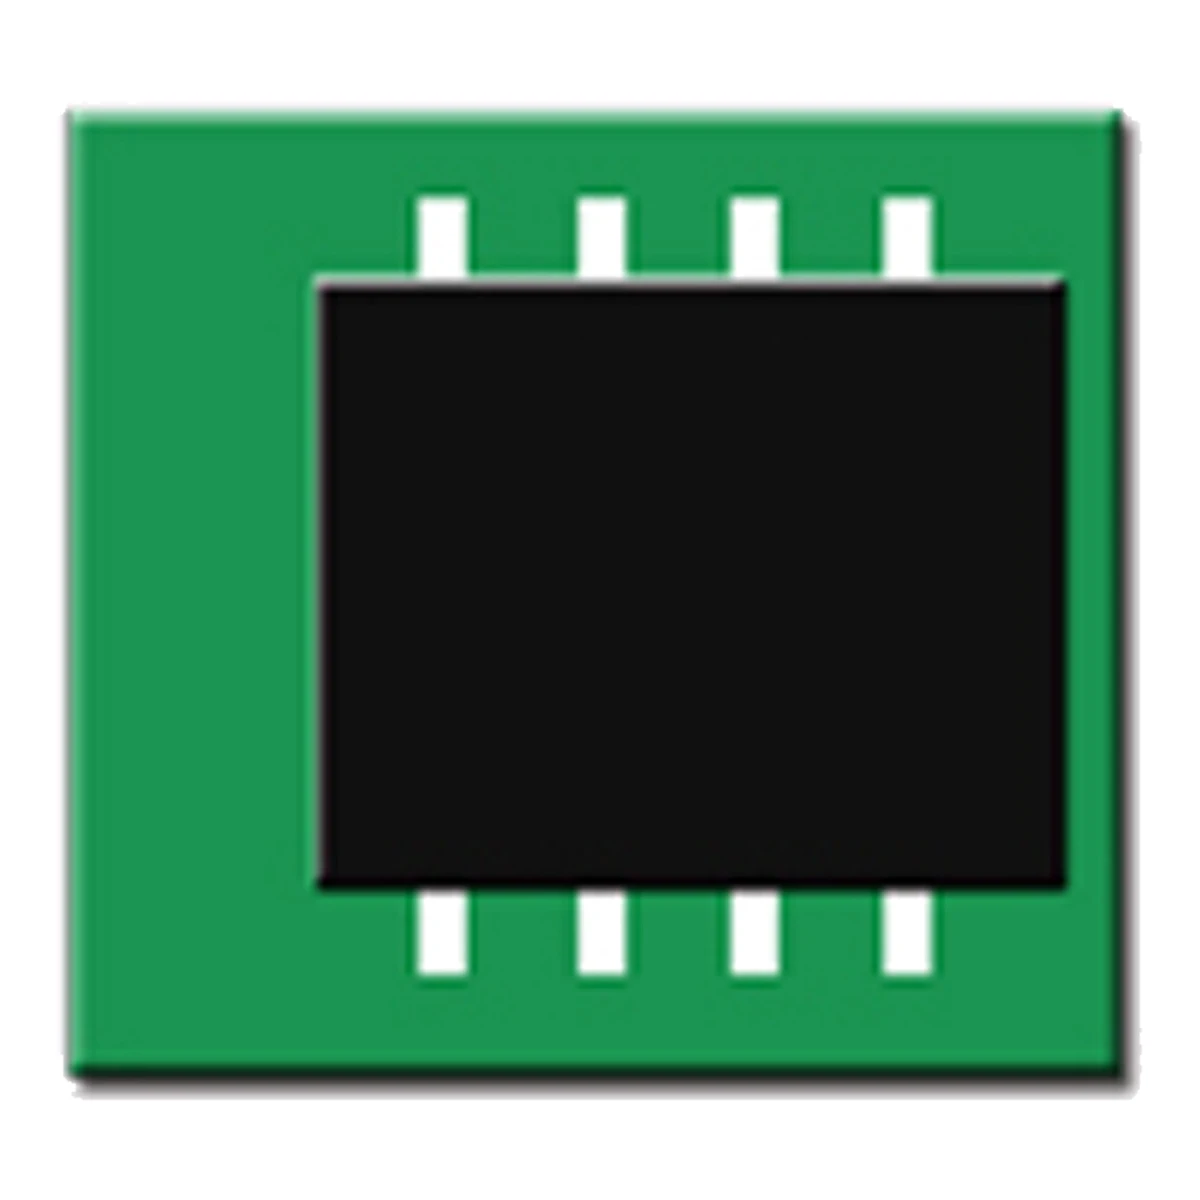 Toner Chip for HP LaserJet Enterprise Flow MFP M-507dng M-528dn M-528f M-528c M-528z M 507n 507dn 507x 507dng 528dn 528f 528c 89